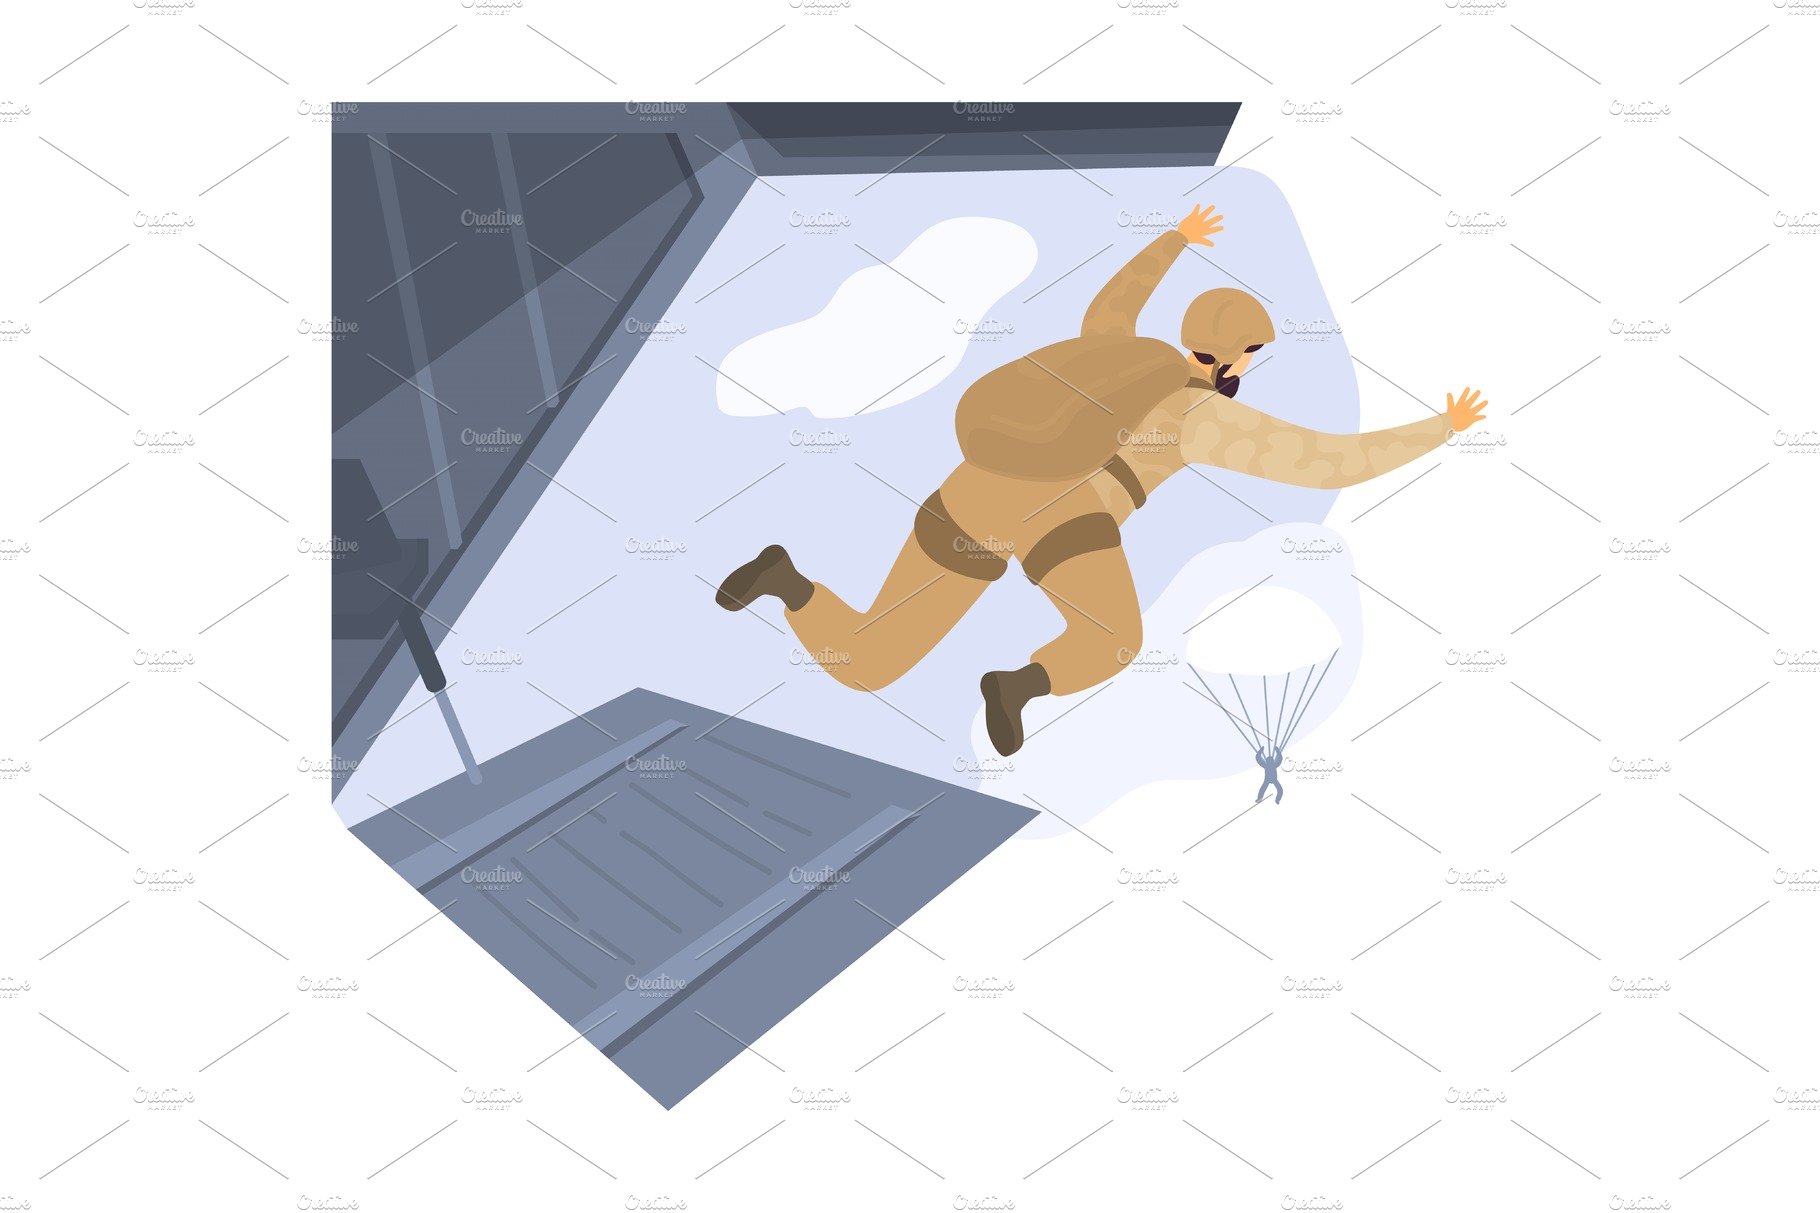 Paratrooper jump parachute combat cover image.